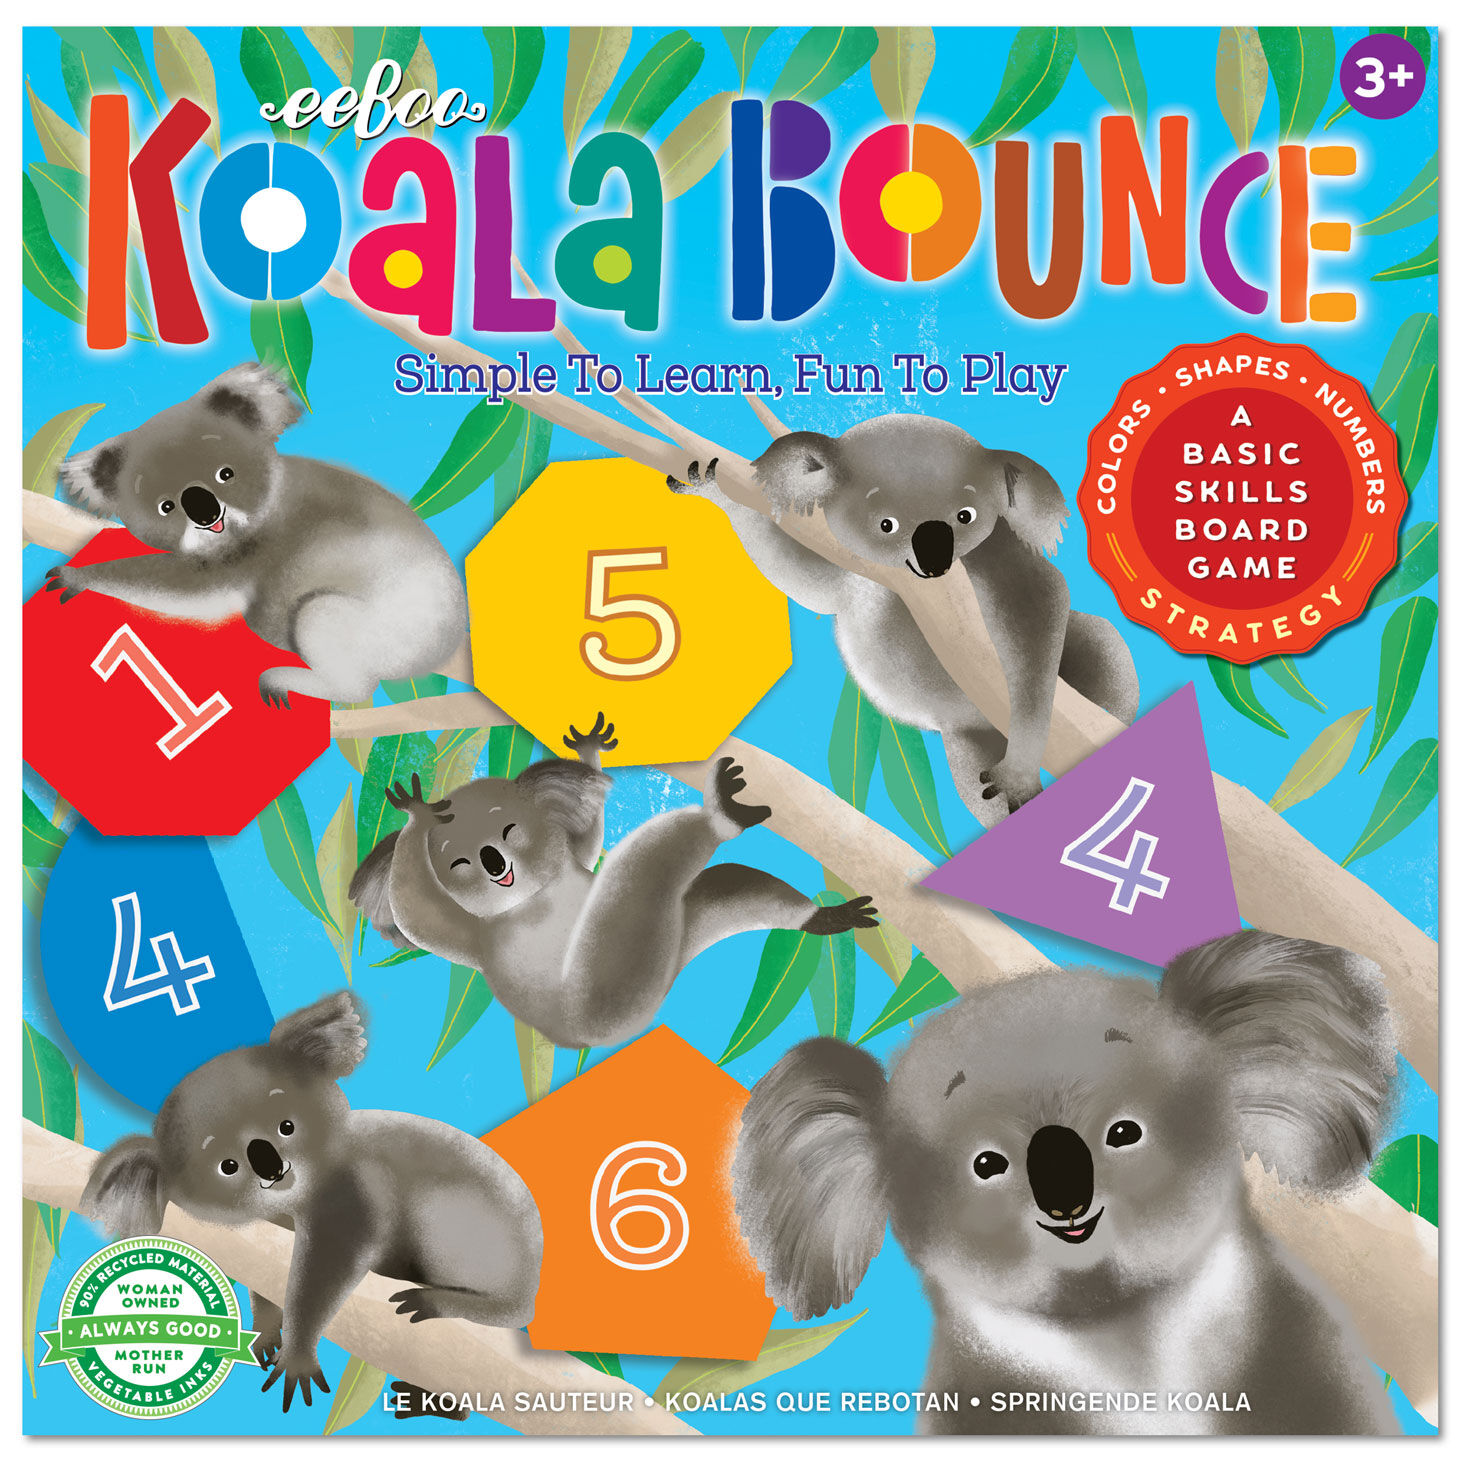 KOALA BROS BASH - Play Online for Free!